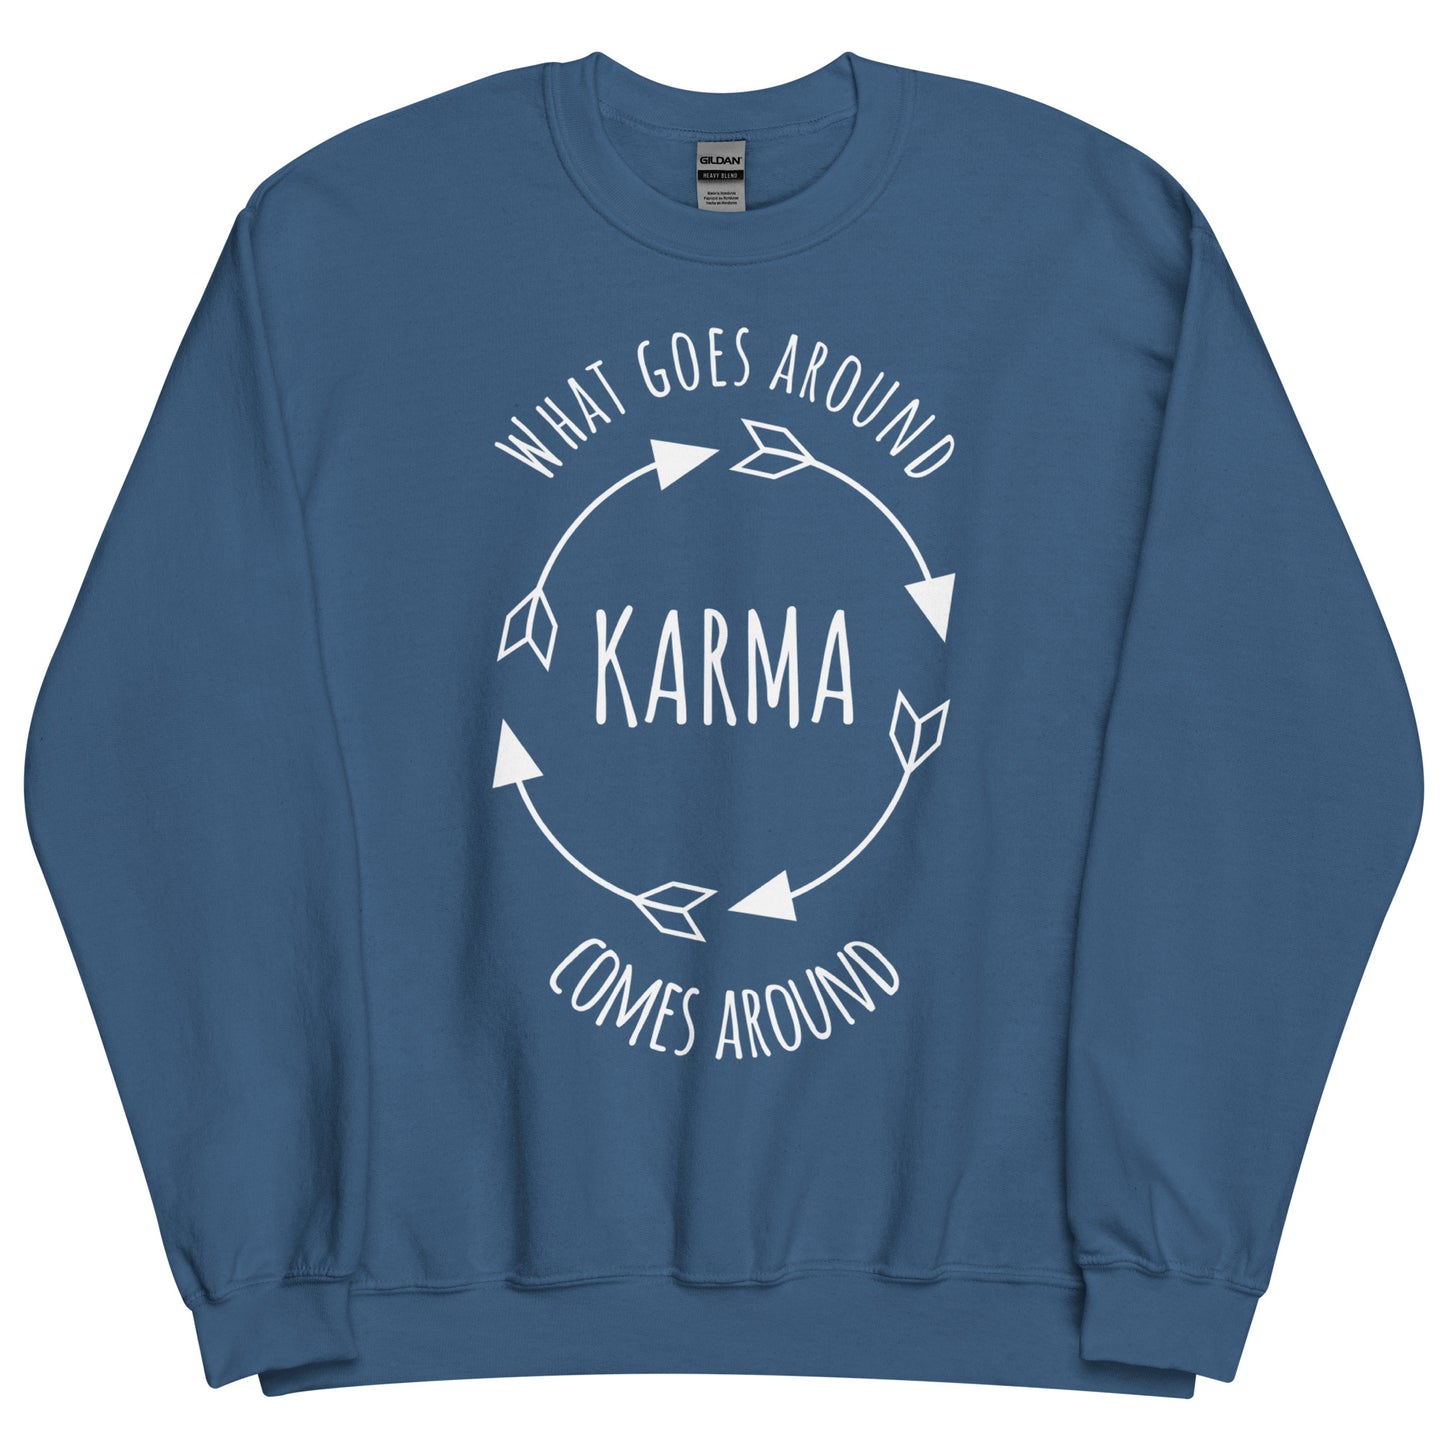 KARMA - what goes around comes around unisex crew neck sweatshirt (white lettering)